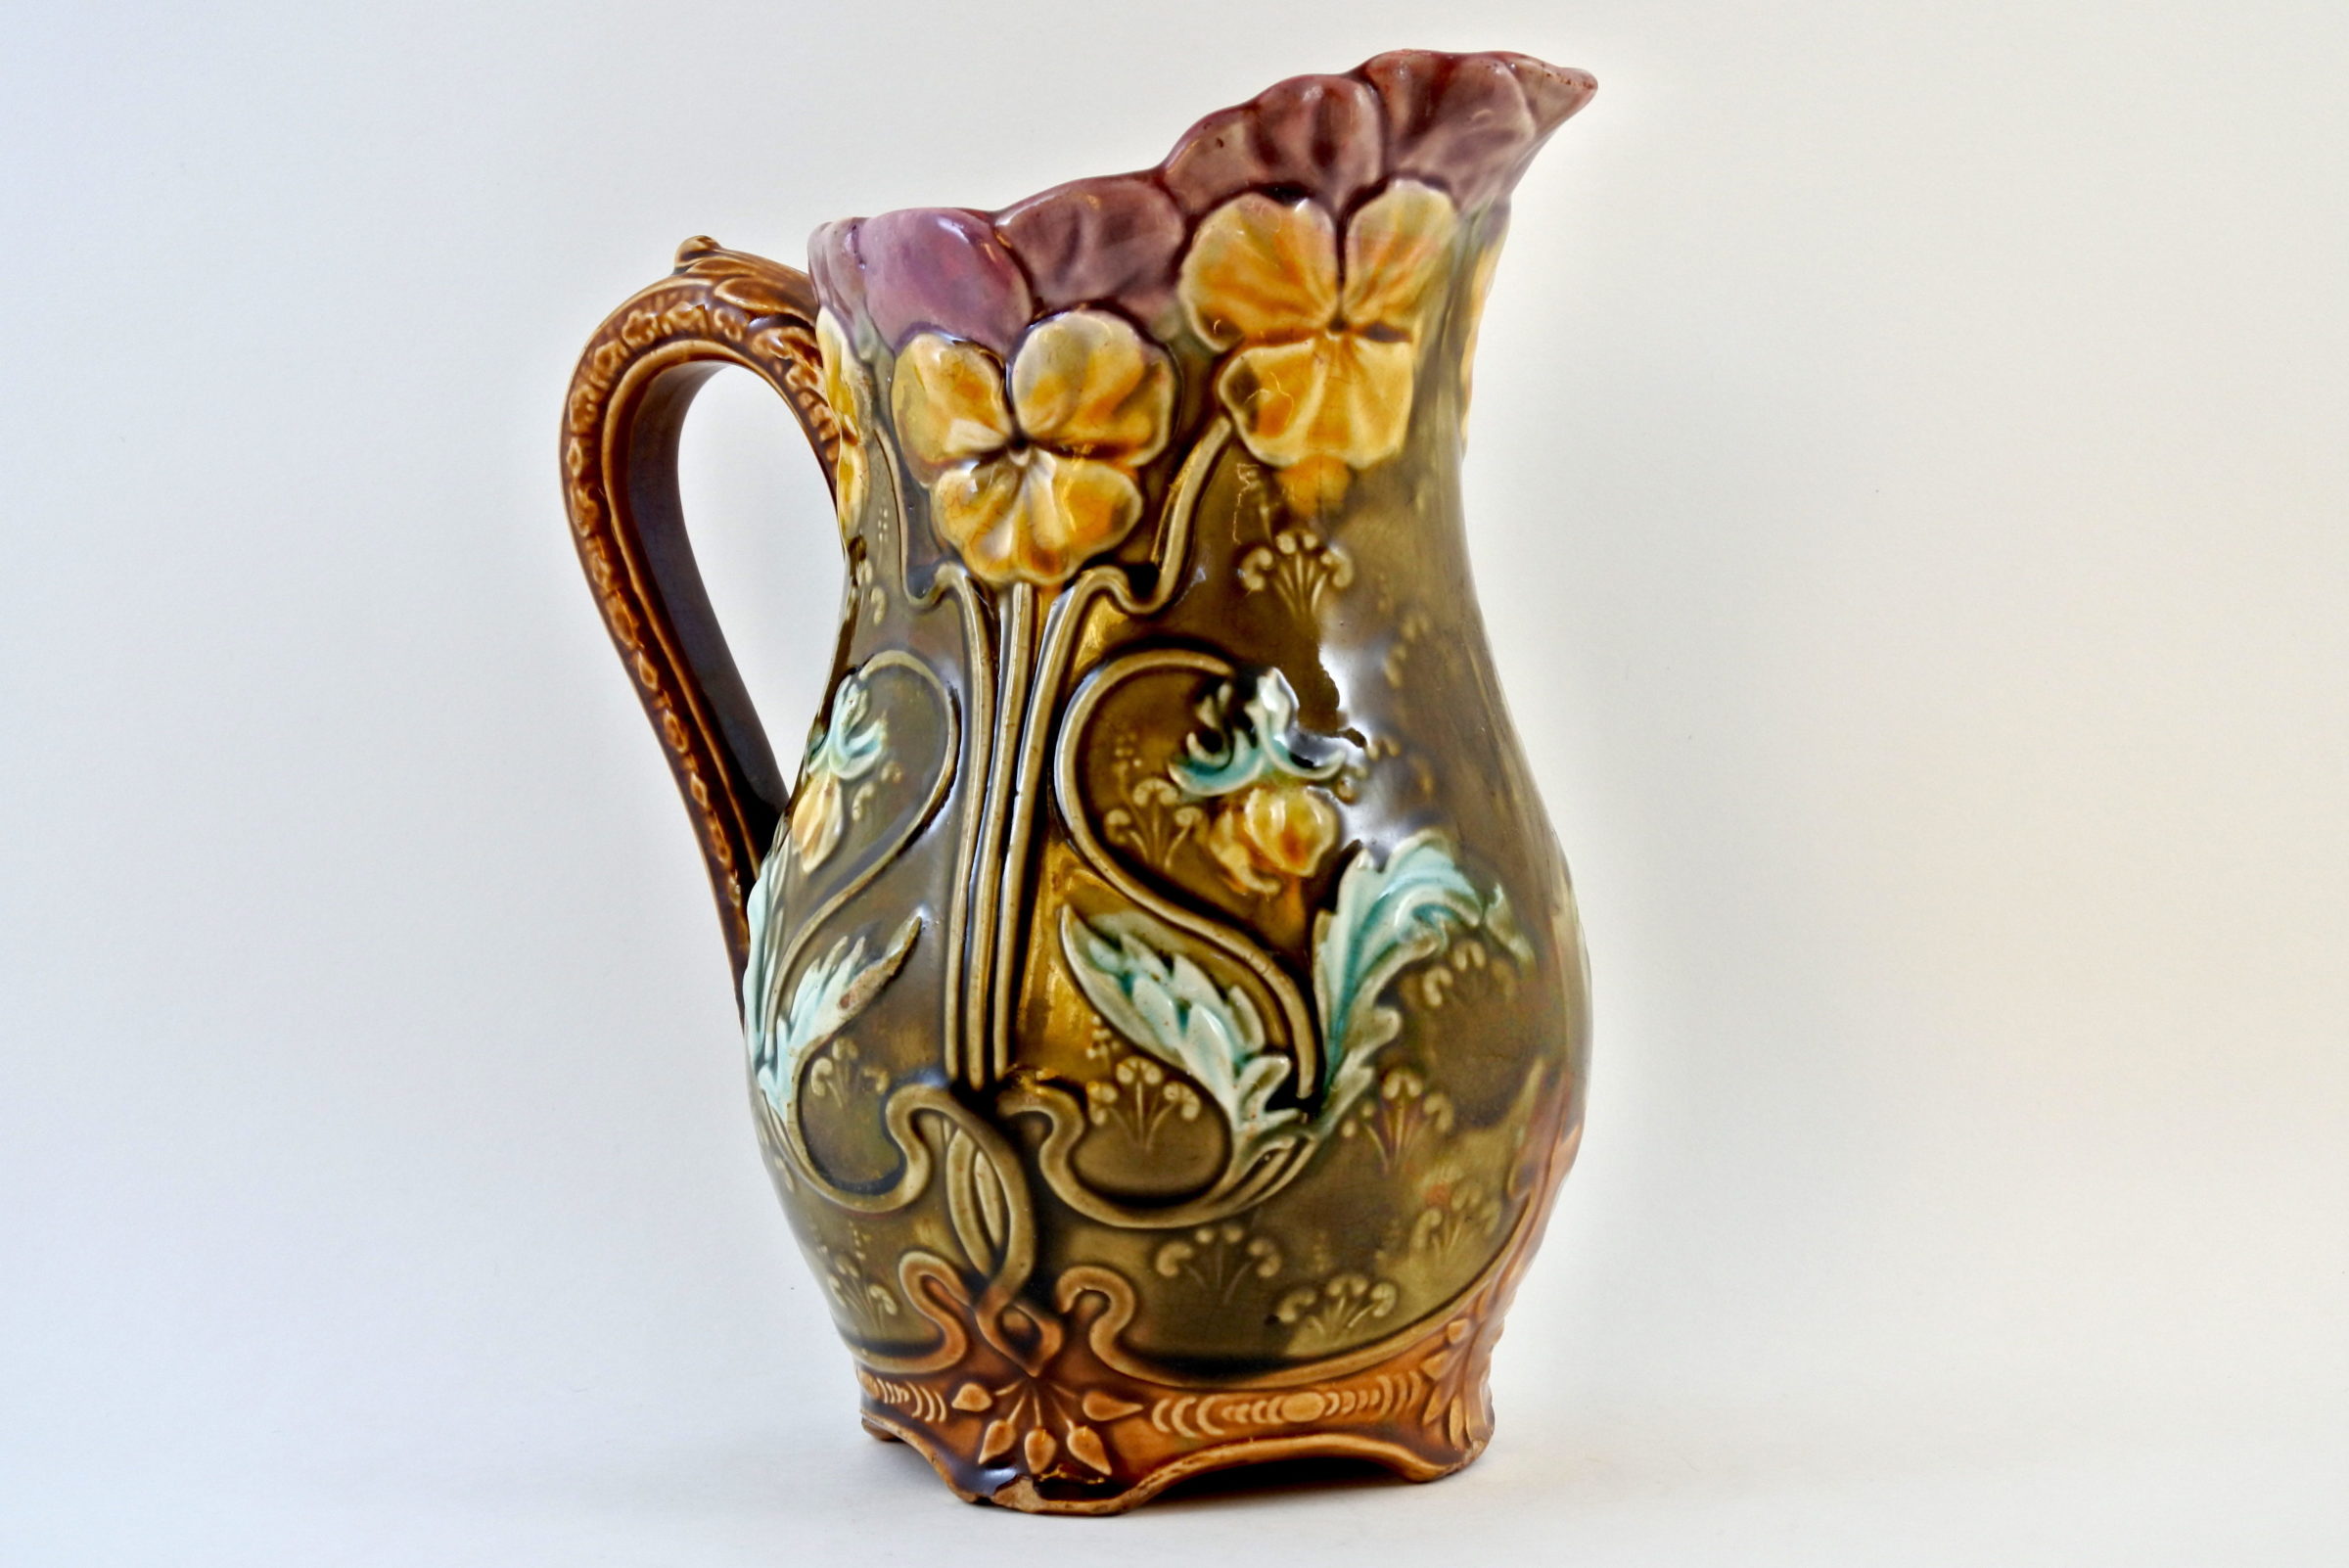 Brocca Onnaing in ceramica barbotine con viole del pensiero - Pensées - 4